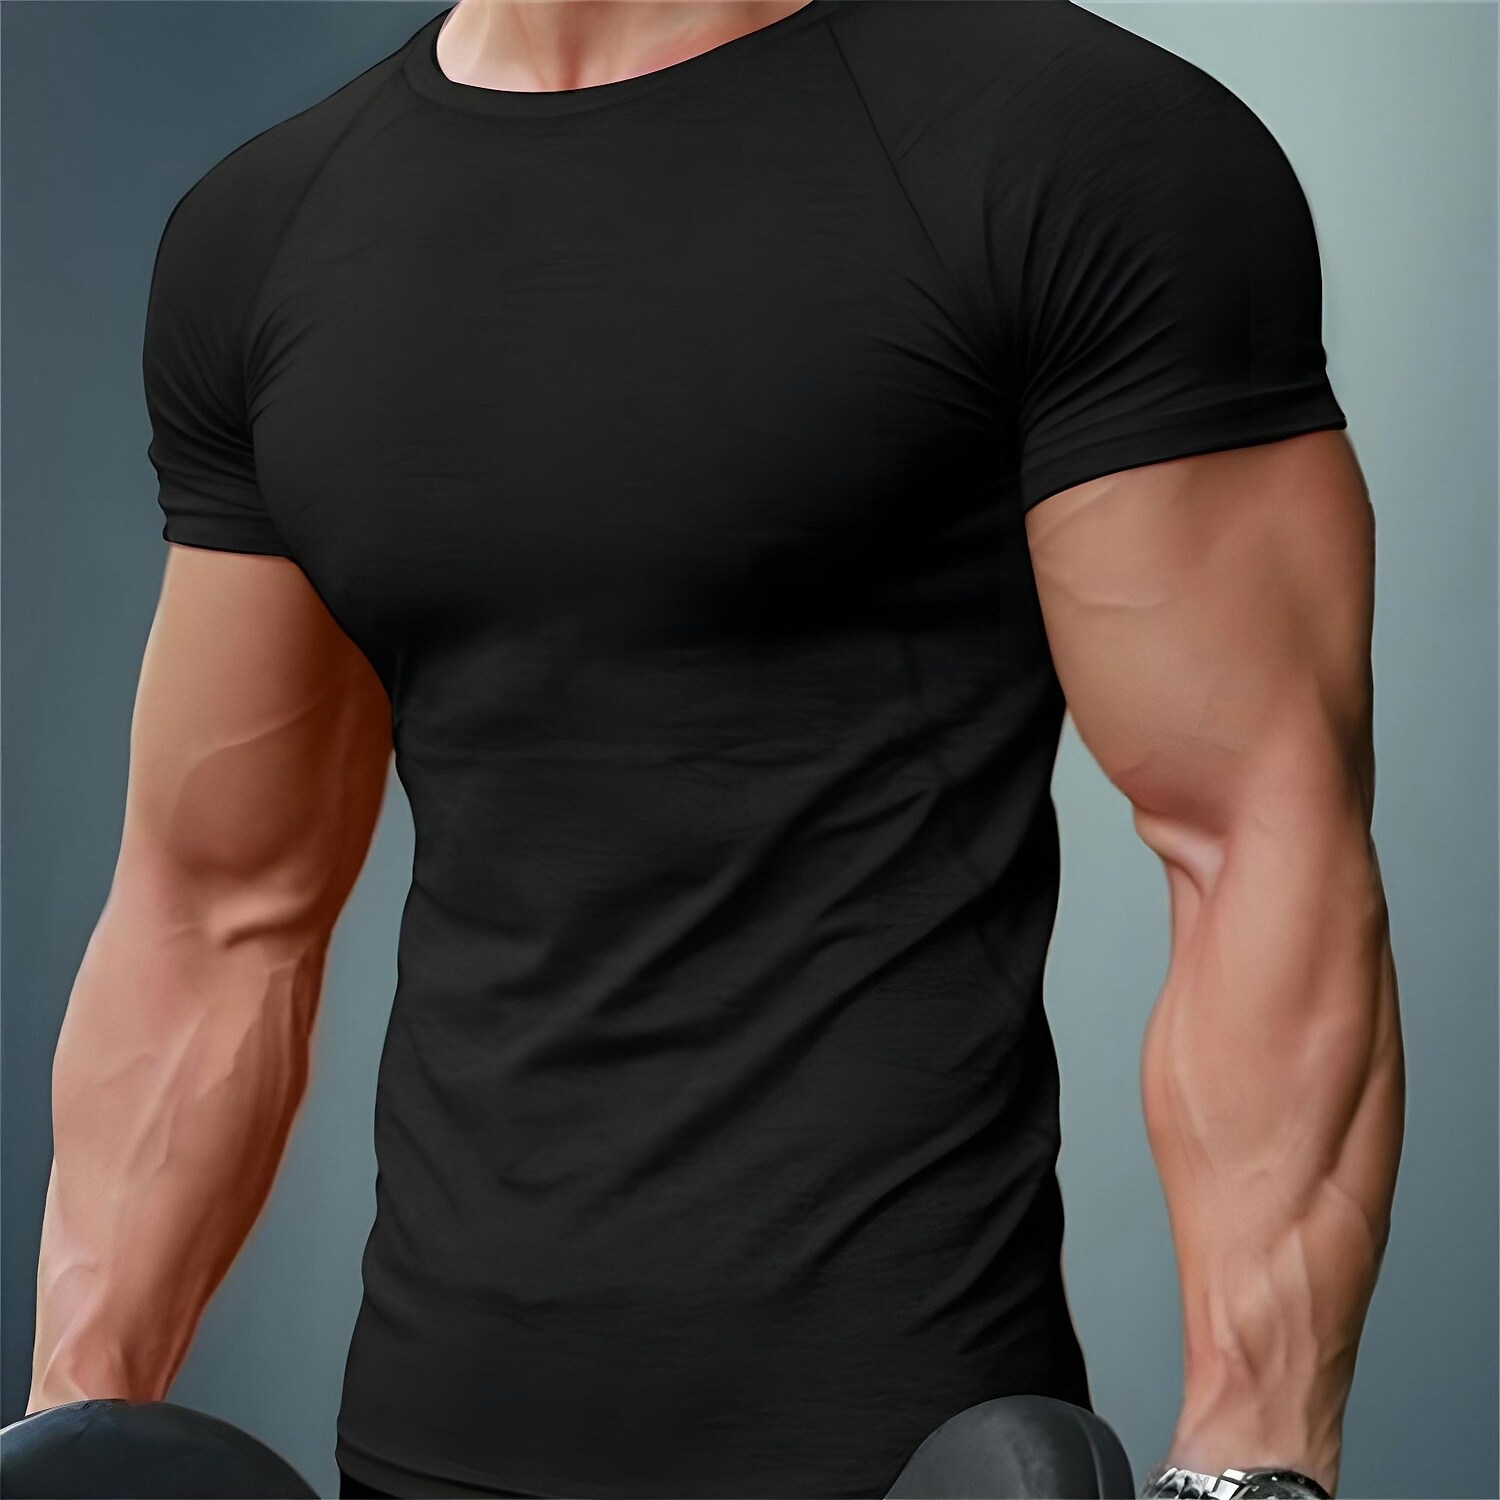 Men's T shirt Muscle Shirt Plain Crew Neck Casual Holiday Short Sleeve Clothing Apparel Cotton Sports Lightweight Top